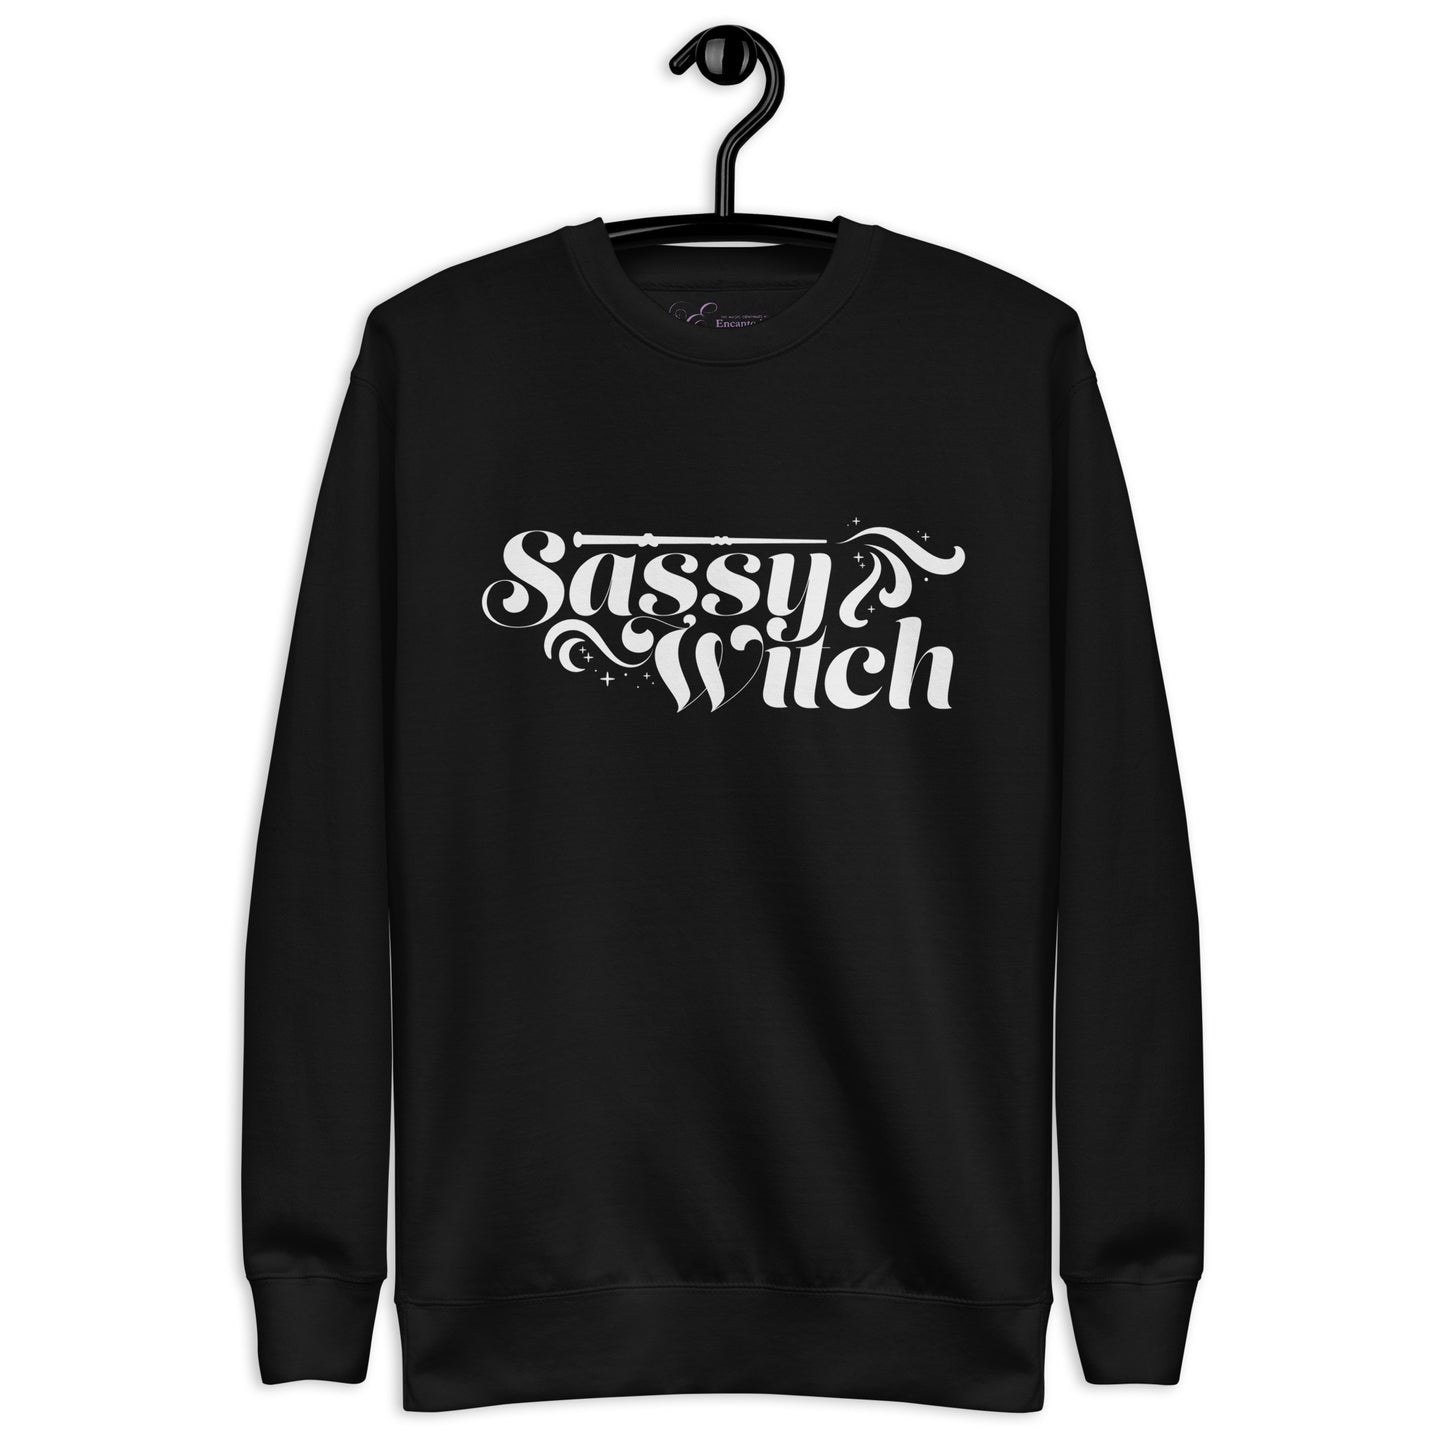 Sassy Witch - Unisex Premium Sweatshirt